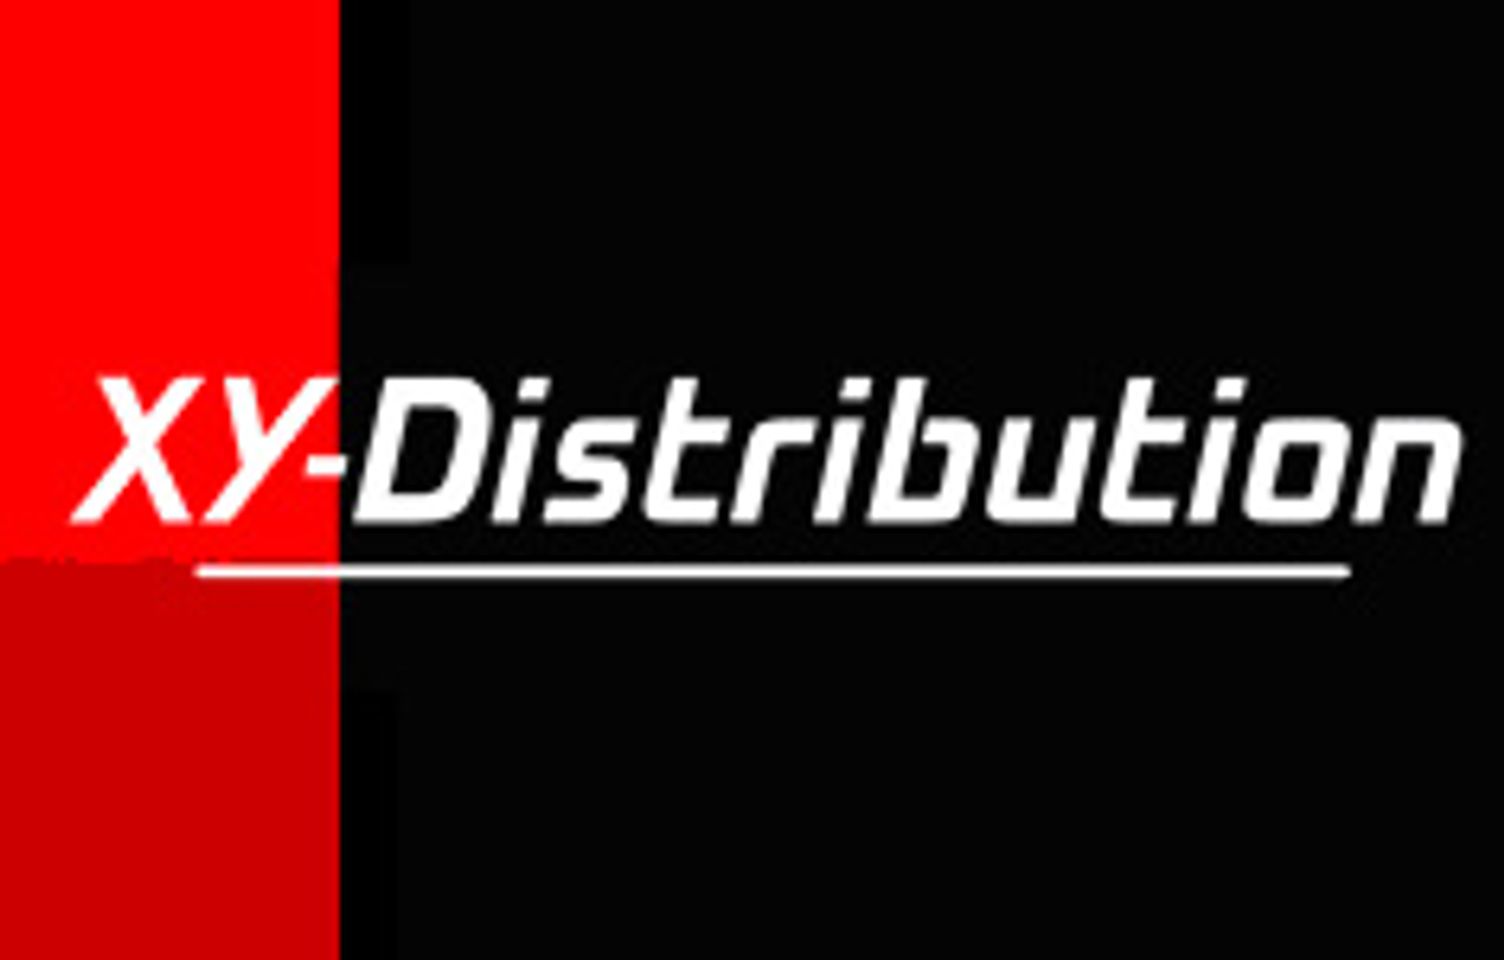 FreshSX, XY-Distribution Sign Distro Deal